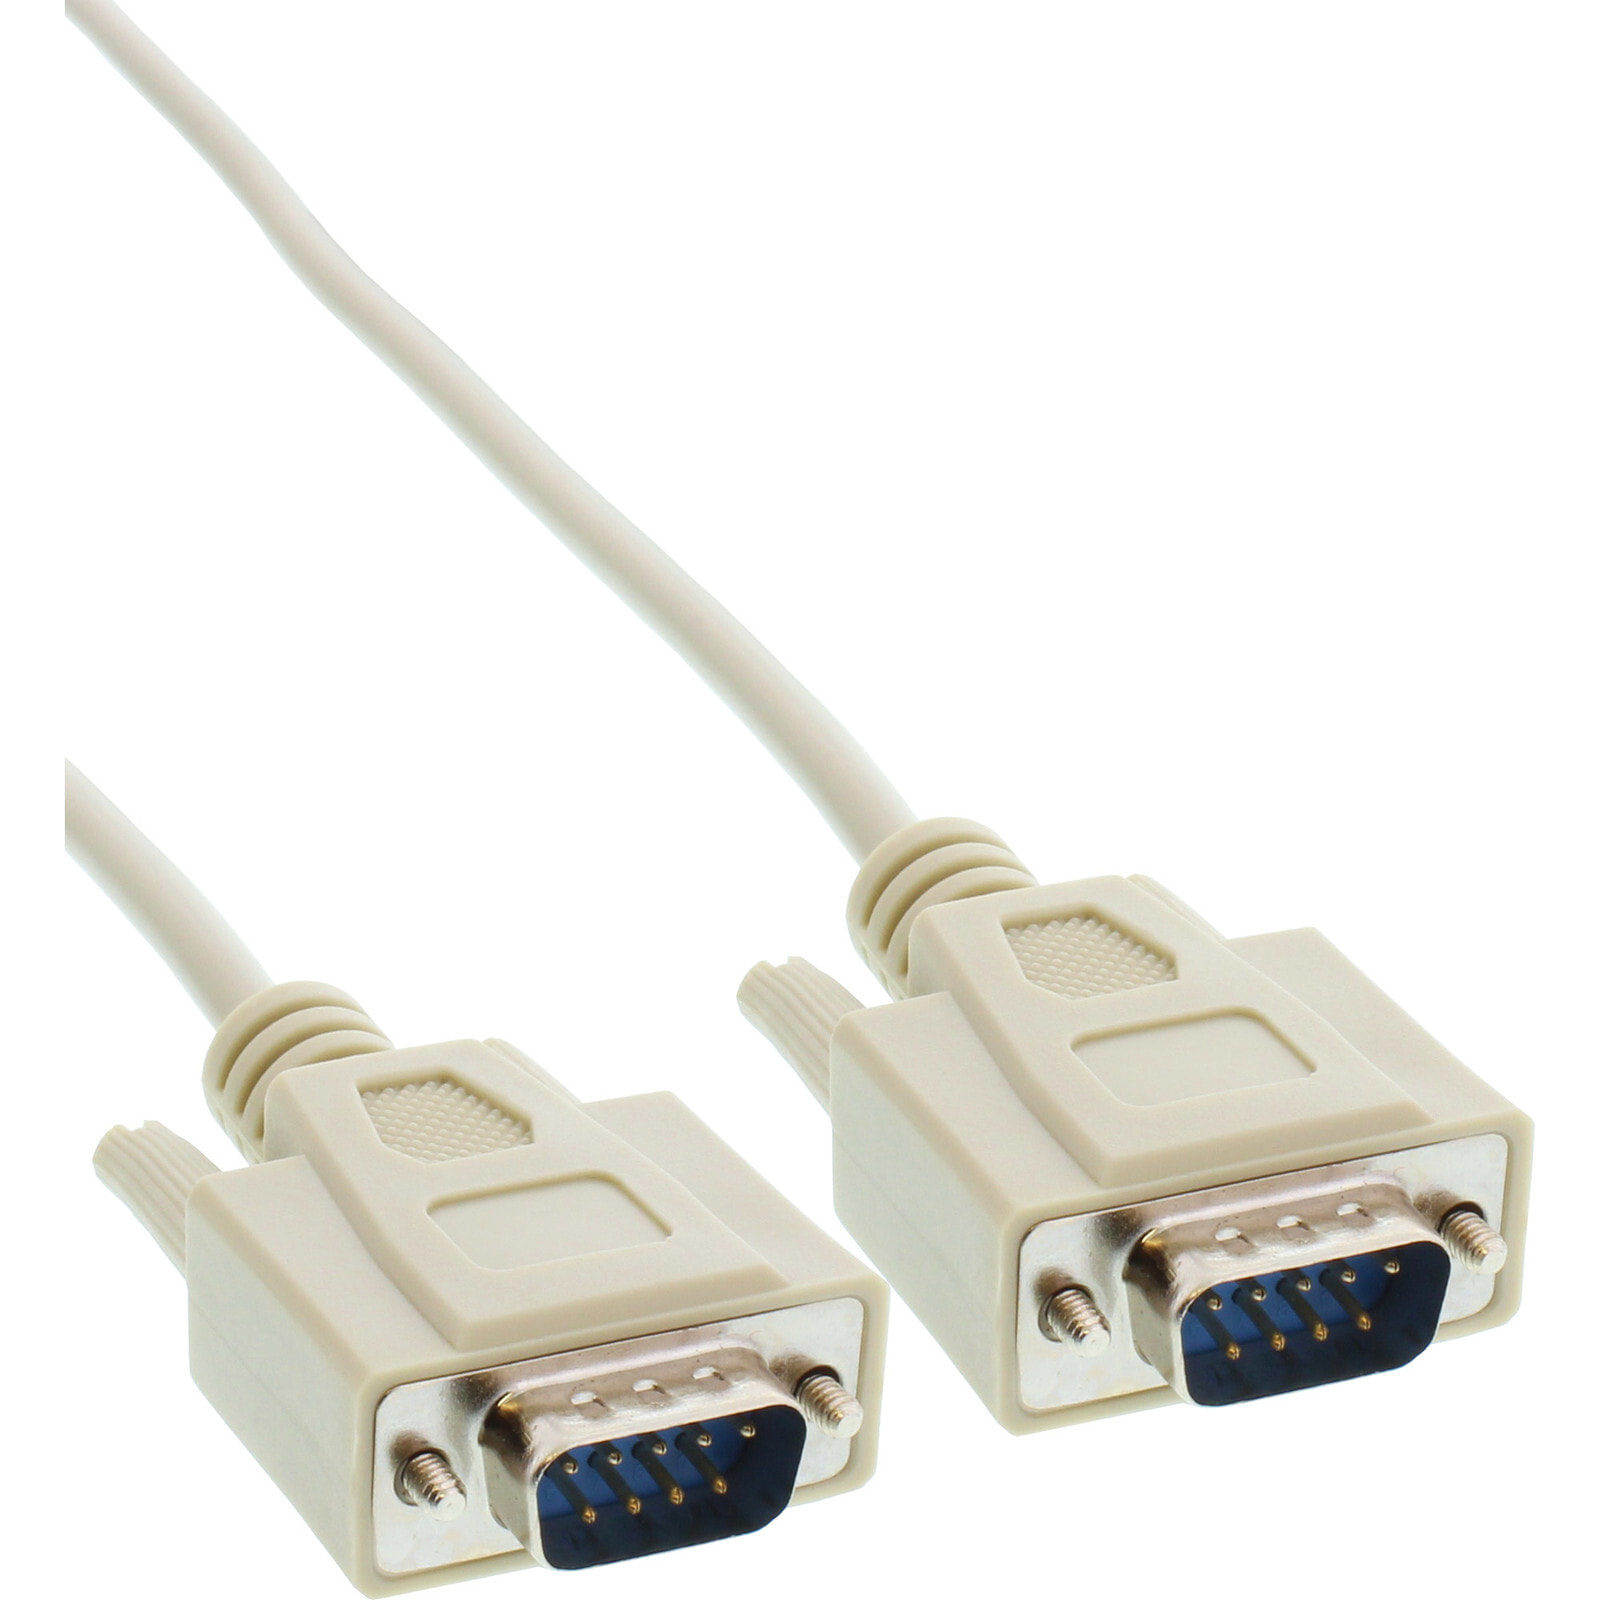 InLine Serial cable DB9 M/M 5m кабель последовательной связи Серый male 9pin Sub D 12215